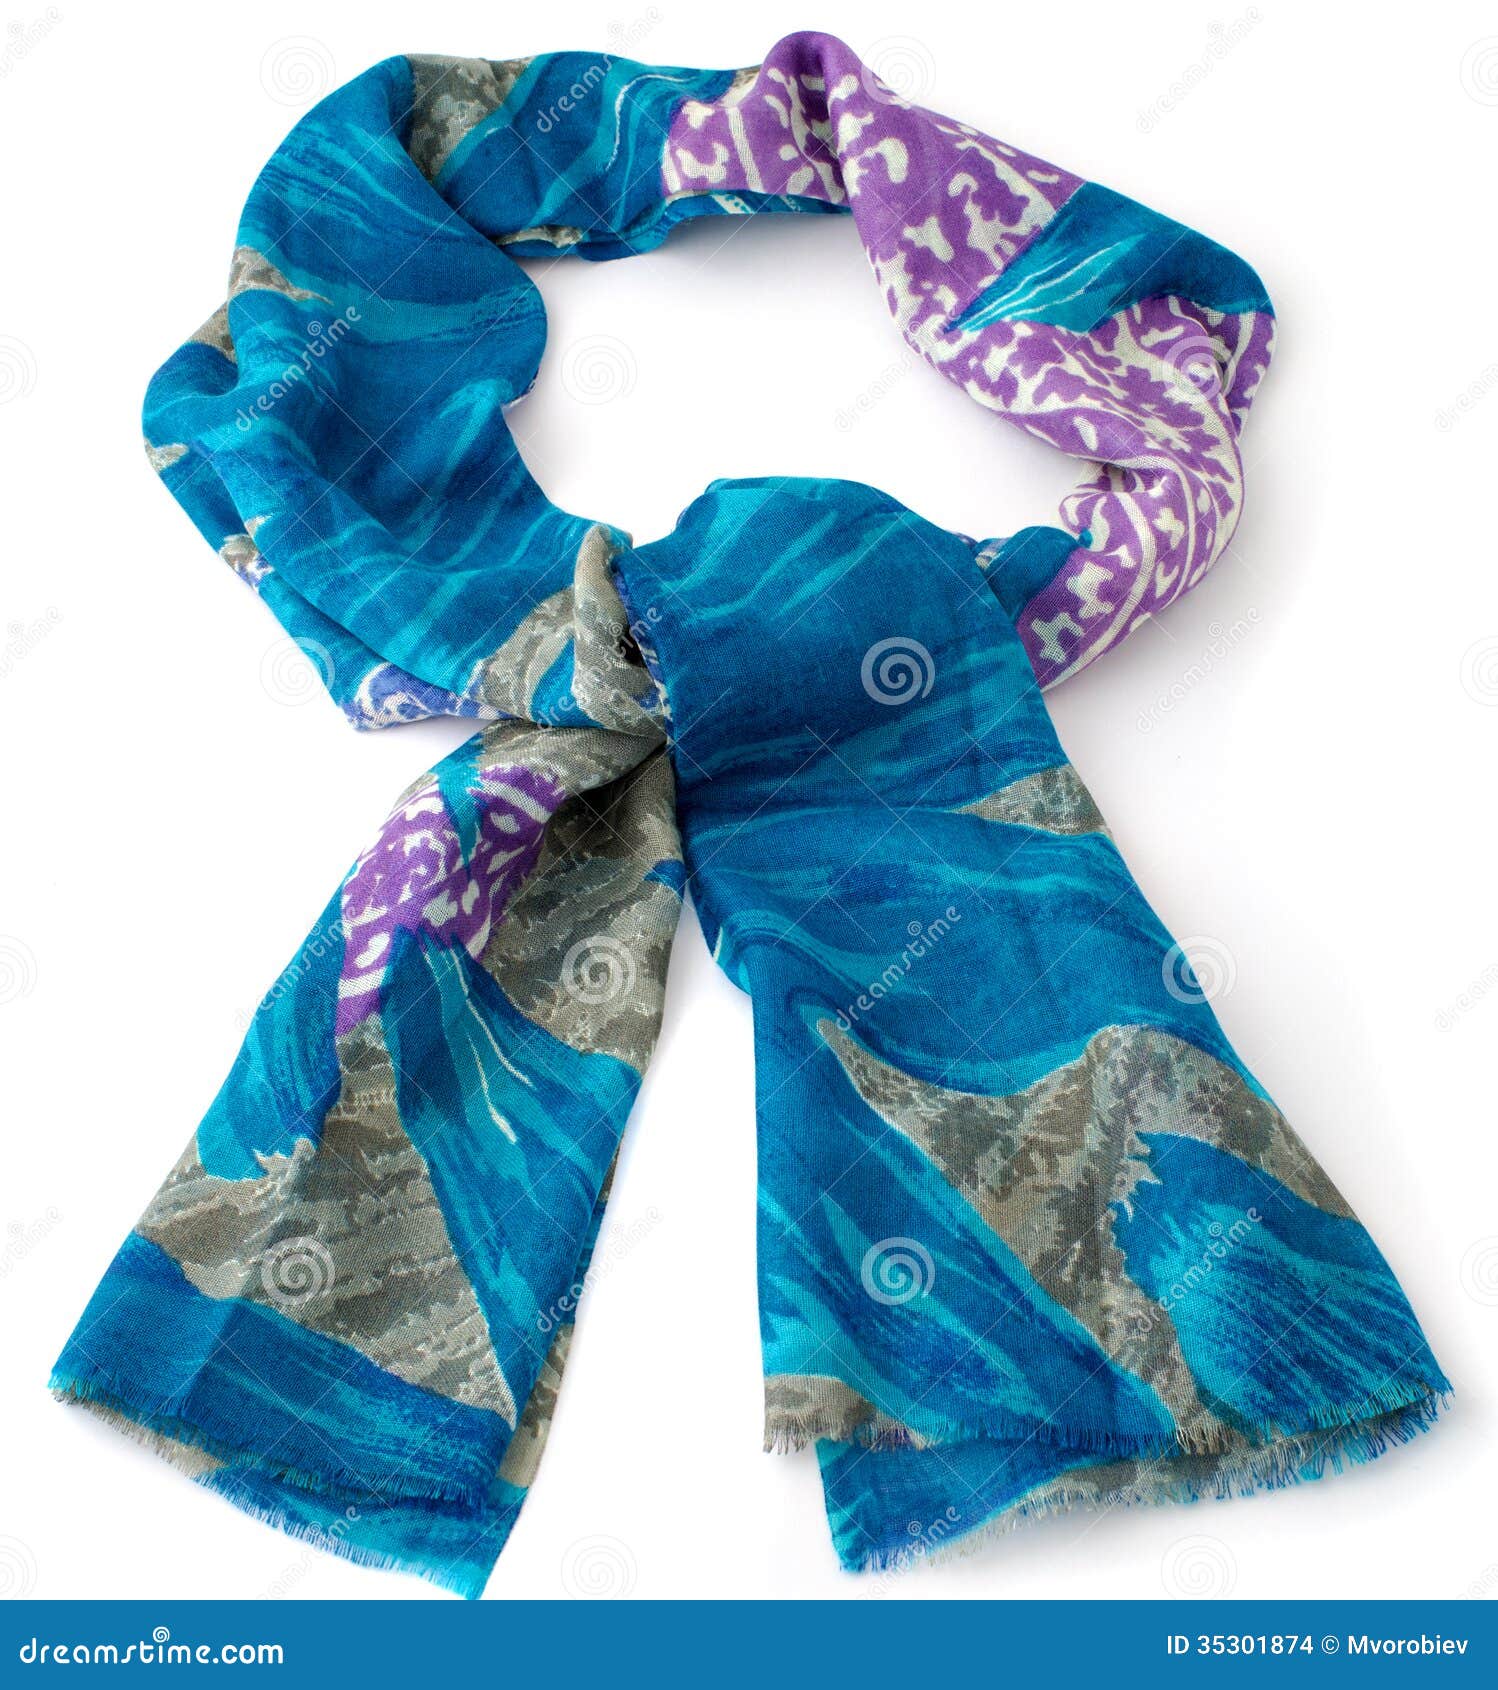 colored scarf or pashmina